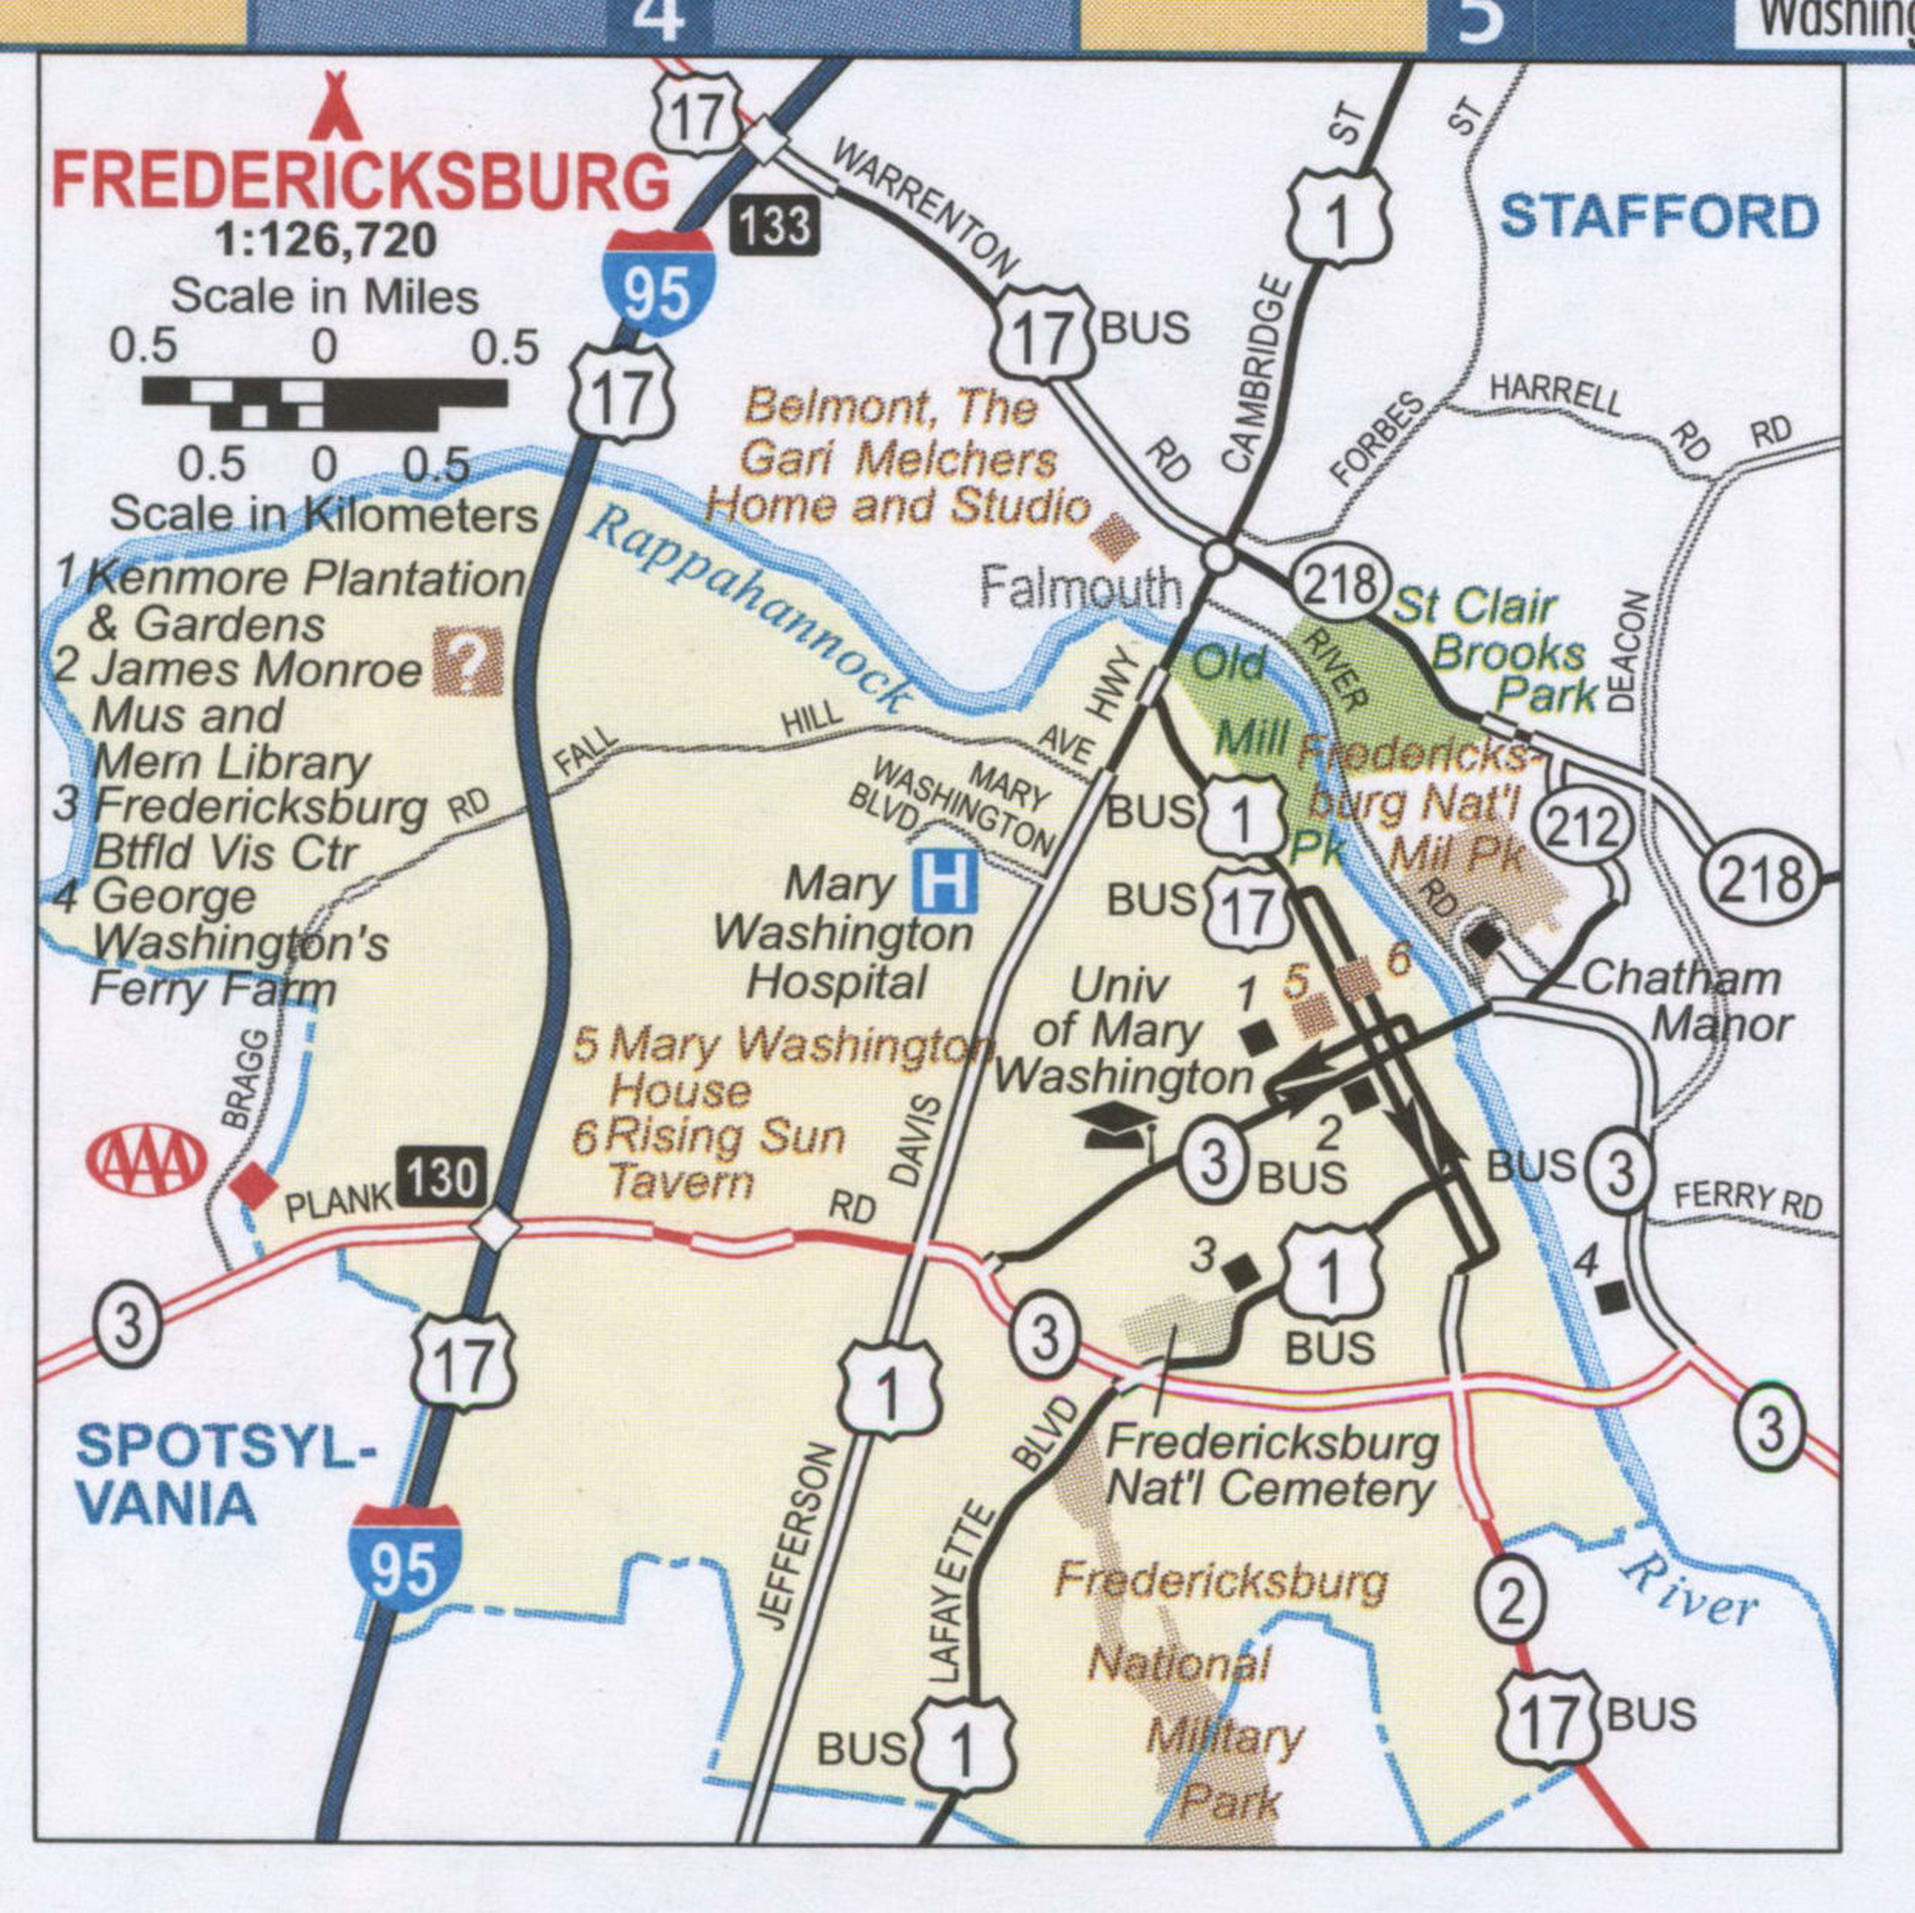 Fredericksburg VA road map